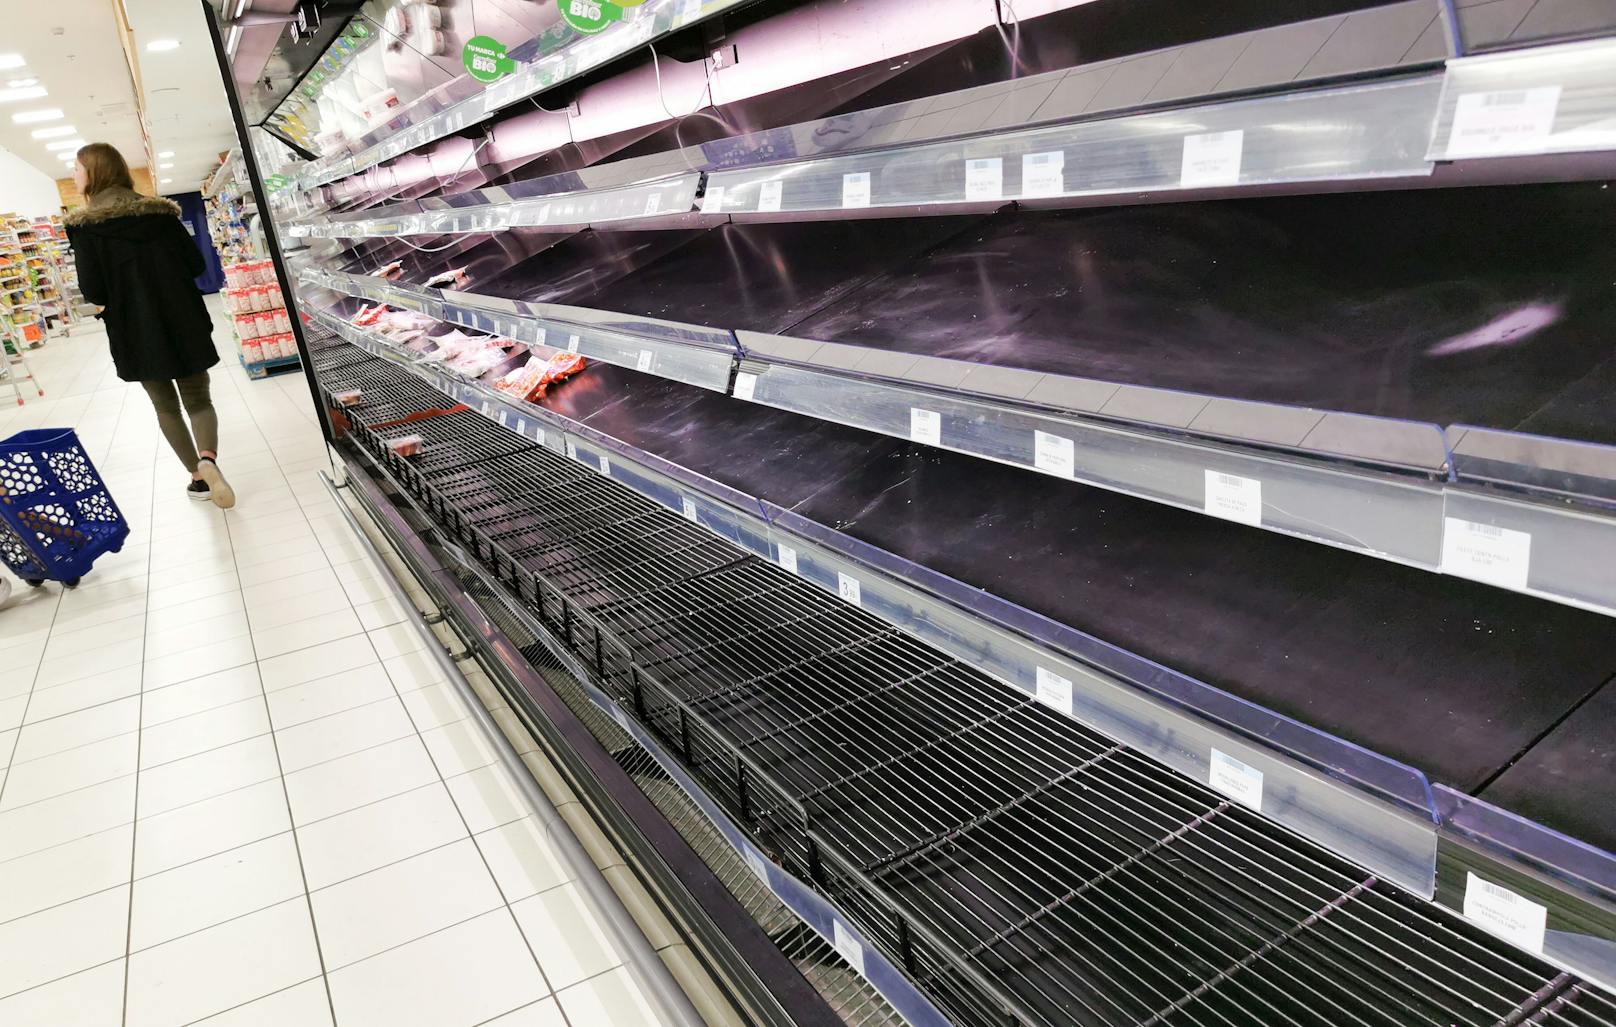 Bauern warnen vor leeren Supermarkt-Regalen